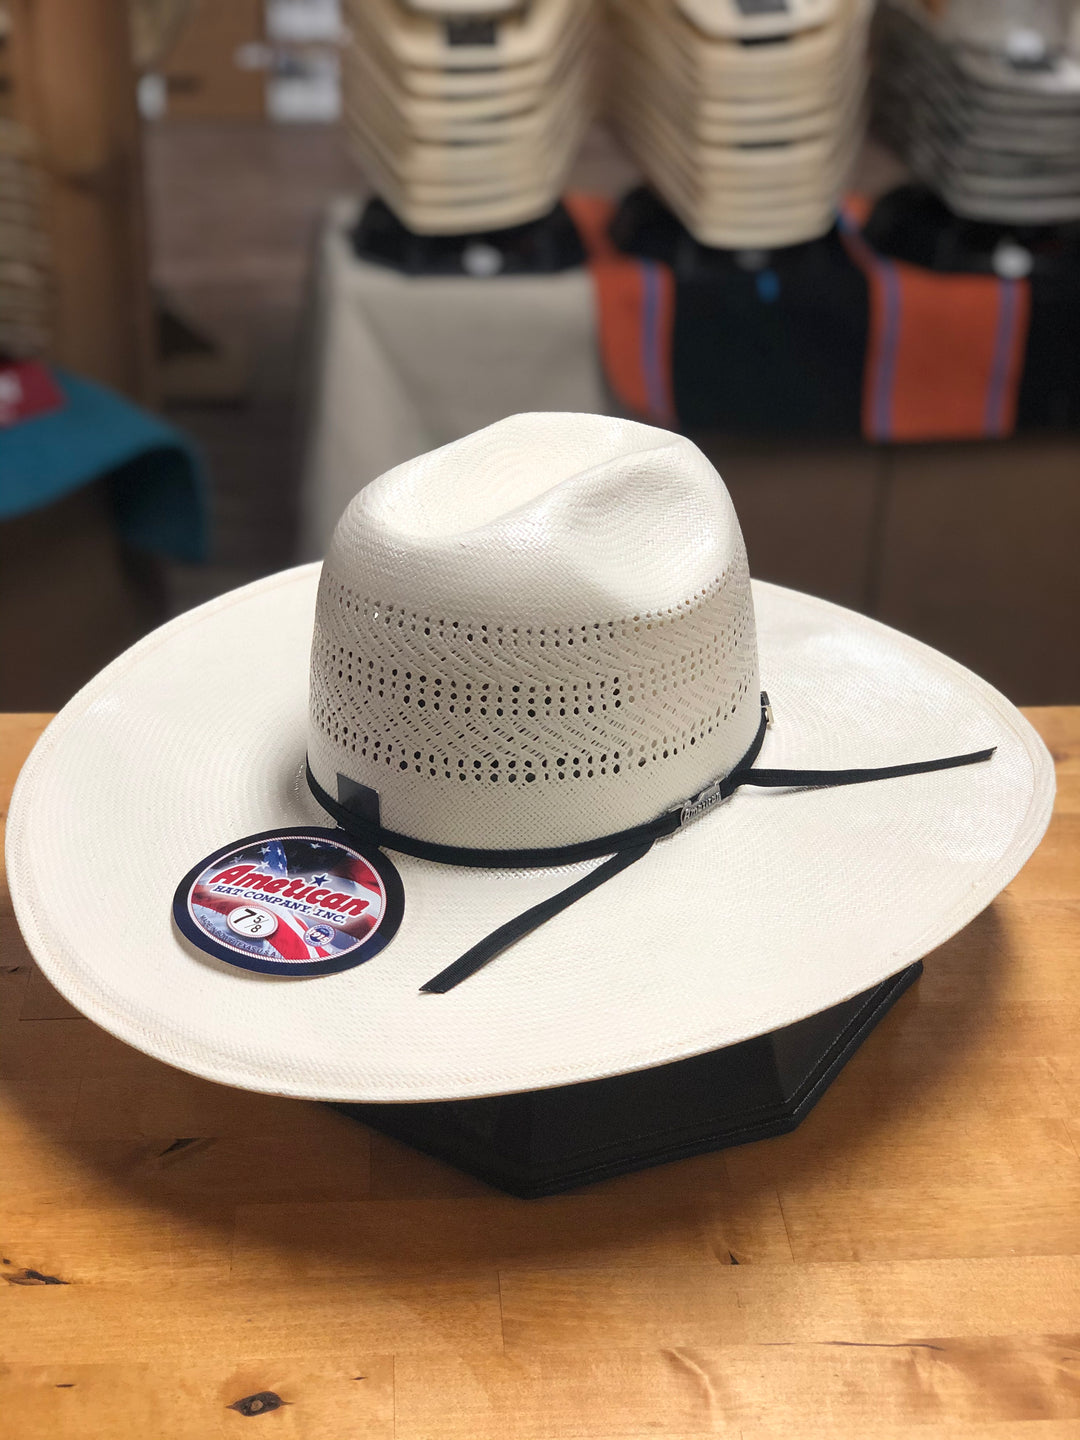 American Hat Company 7400 Straw Cowboy Hat